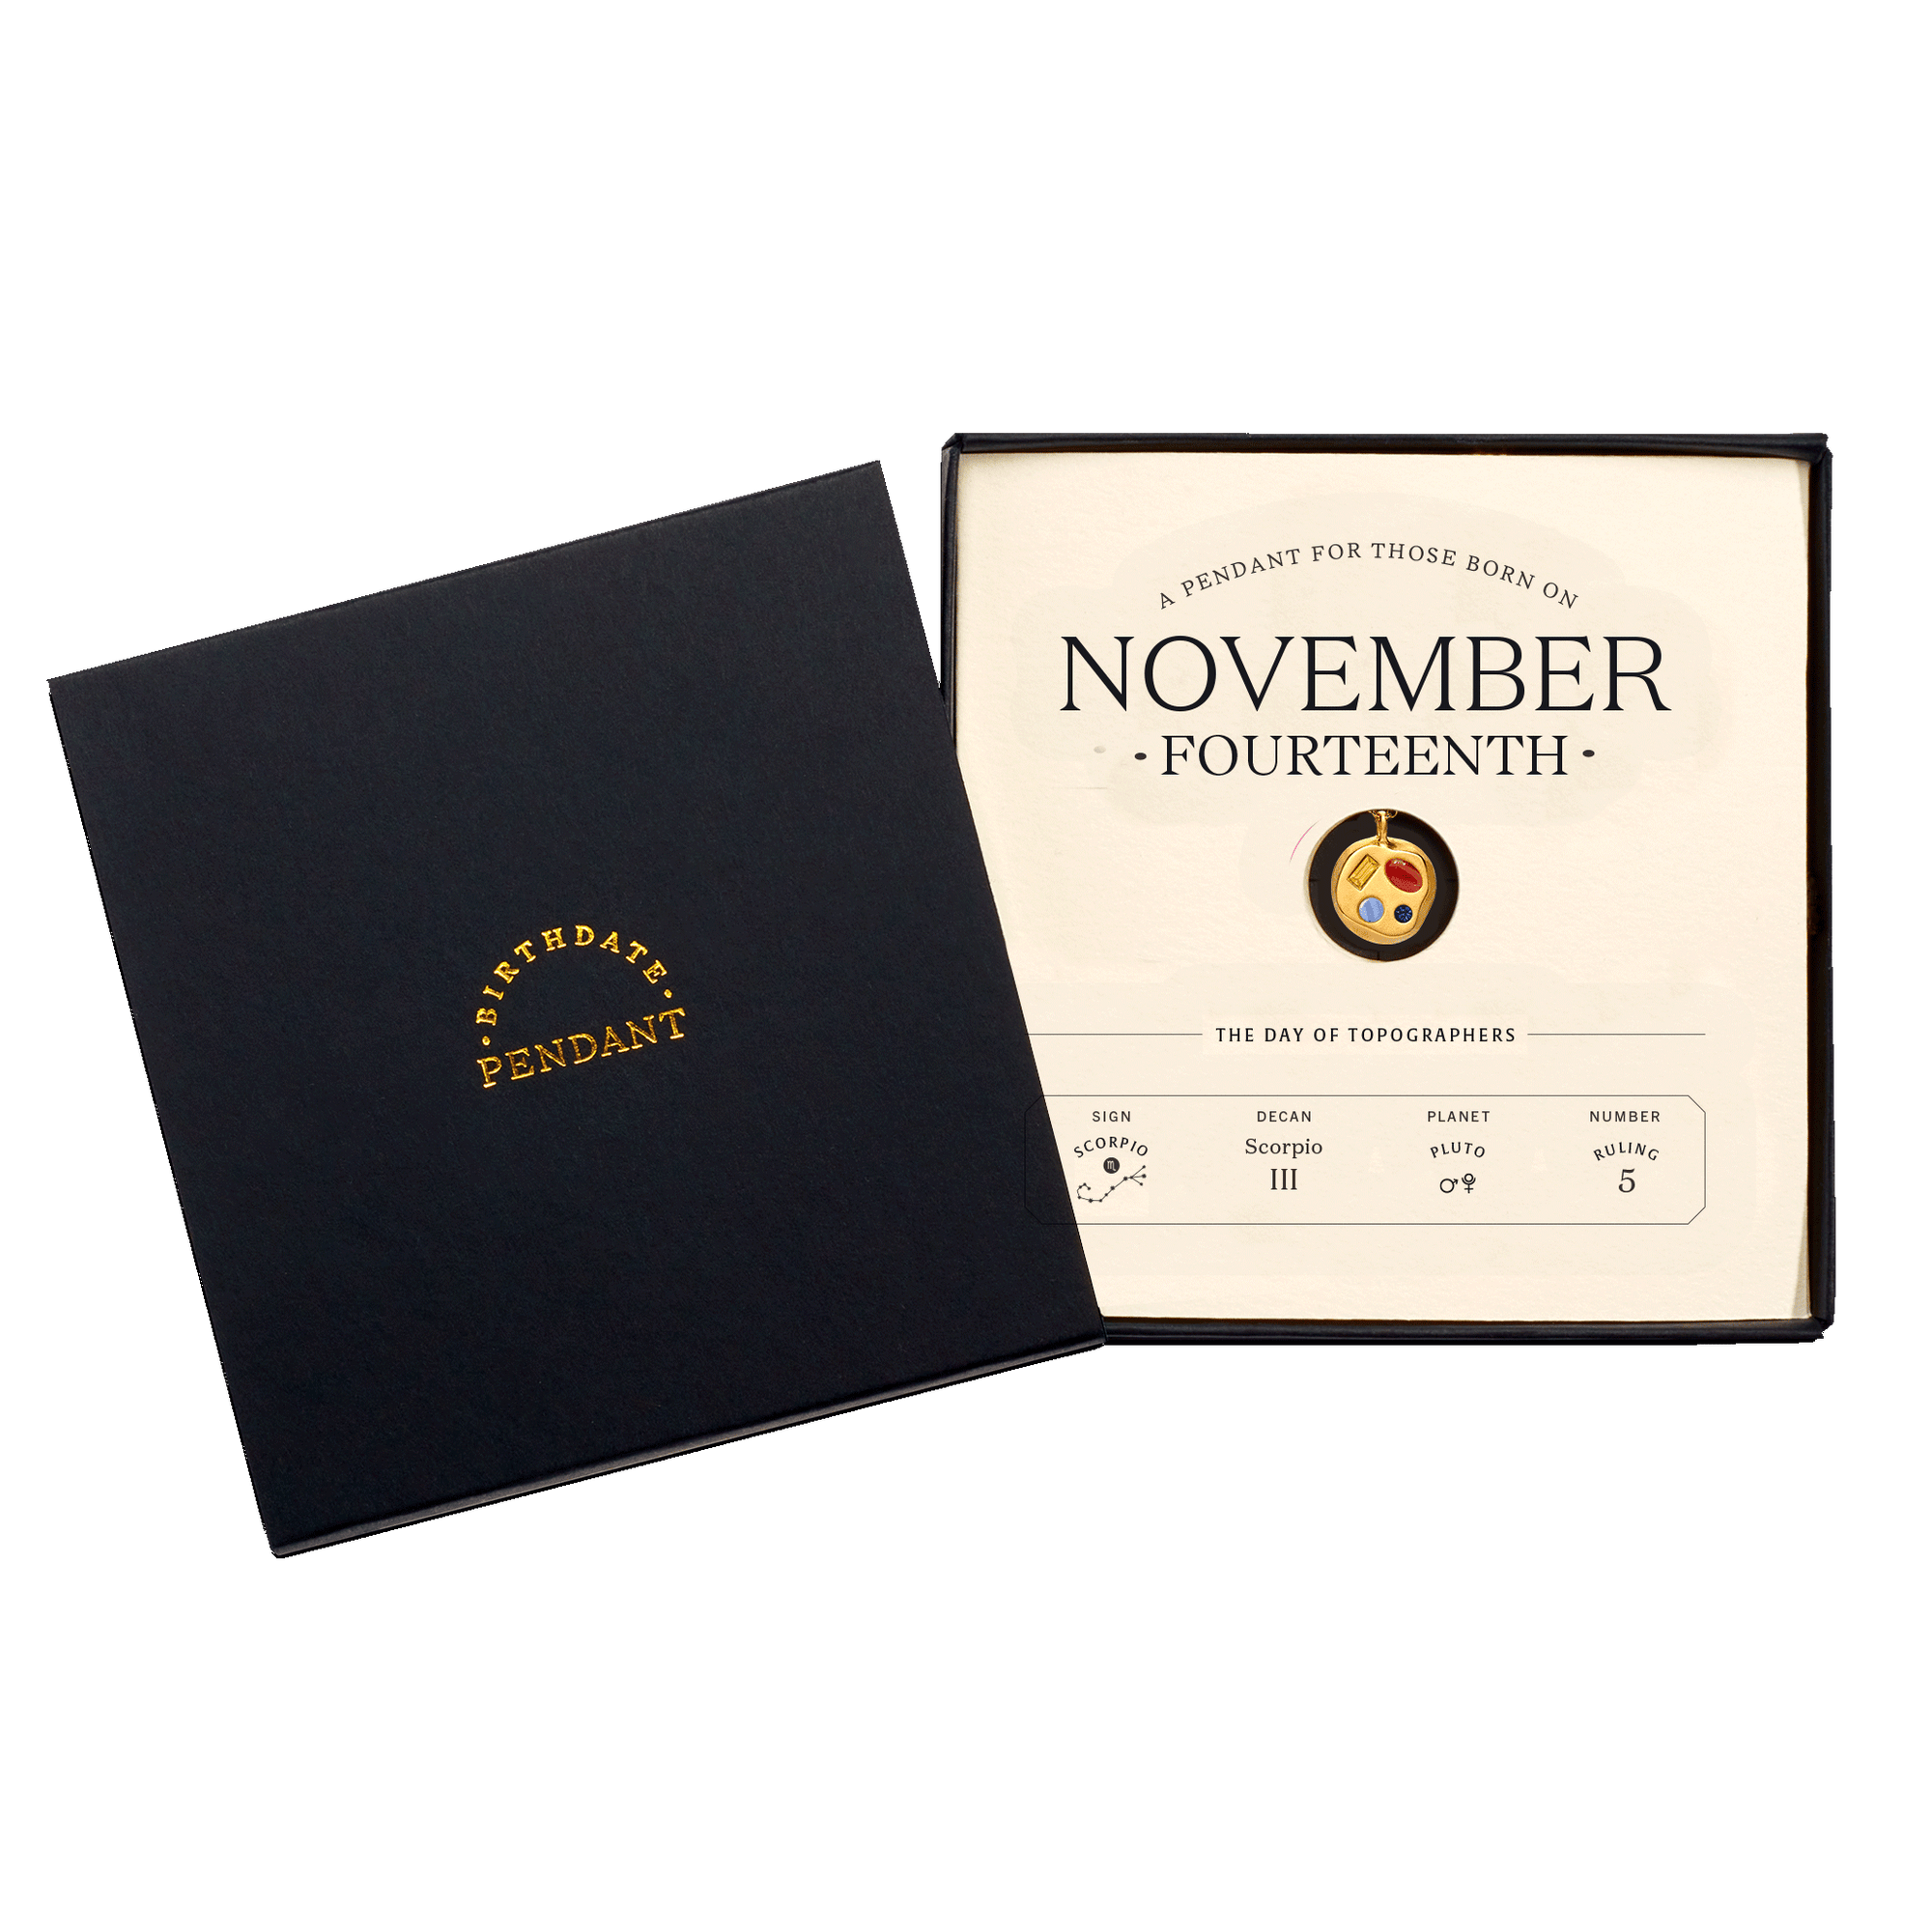 The November Fourteenth Pendant inside its box